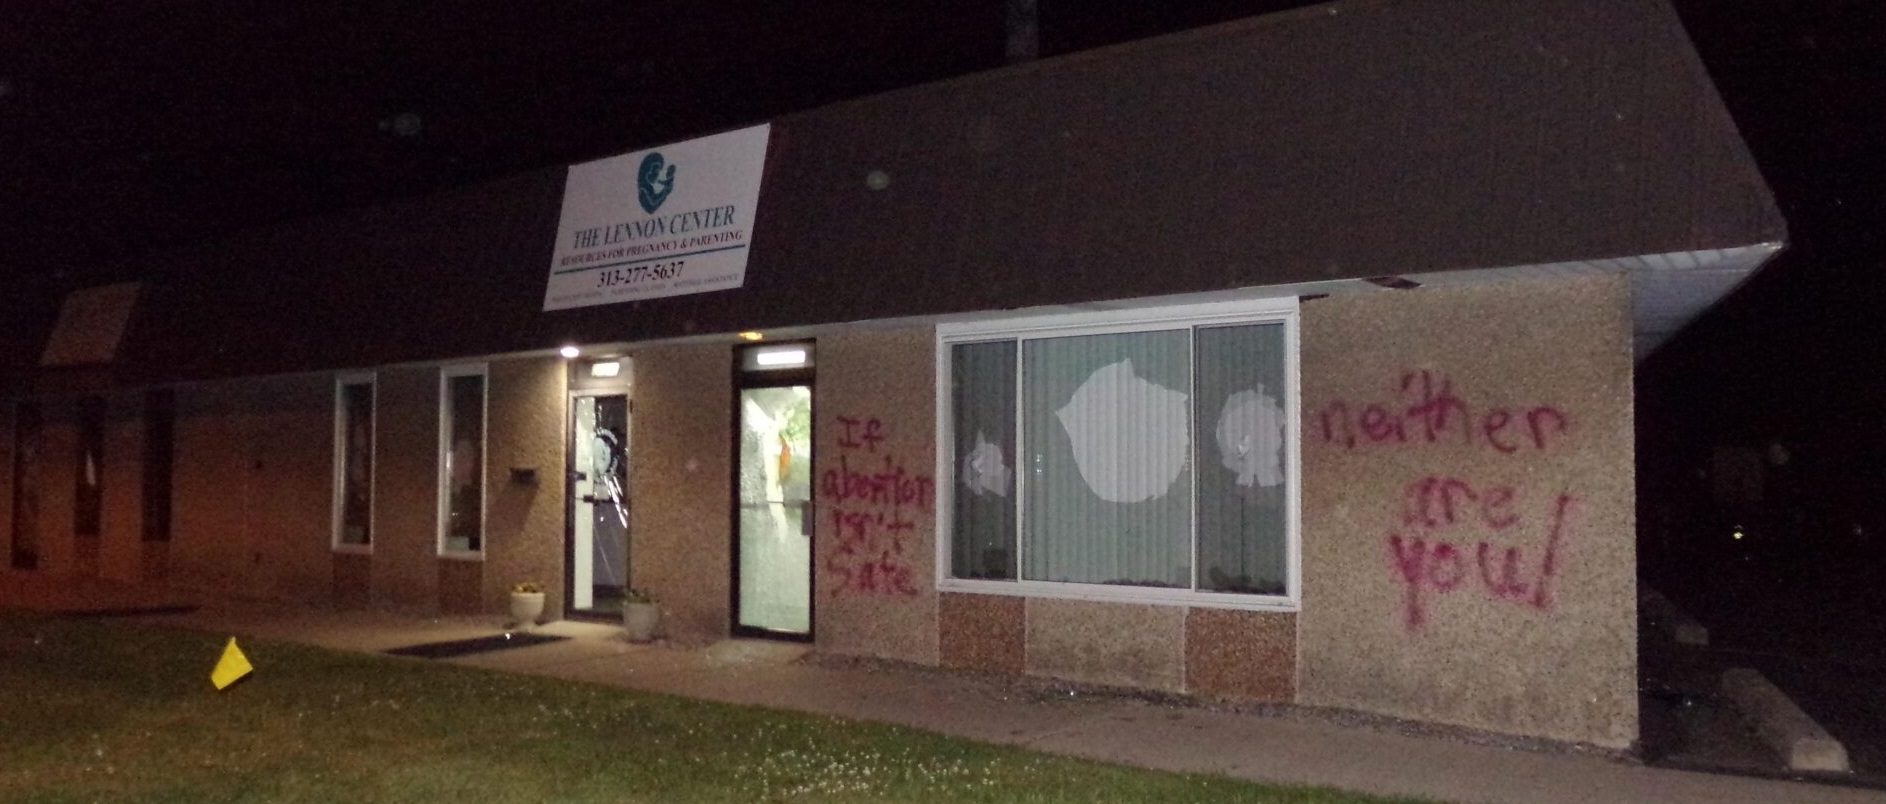 Lennon Center prolife Pregnancy Center near Detroit vandalized by abortion extremists June 19 Abolition Media Blog